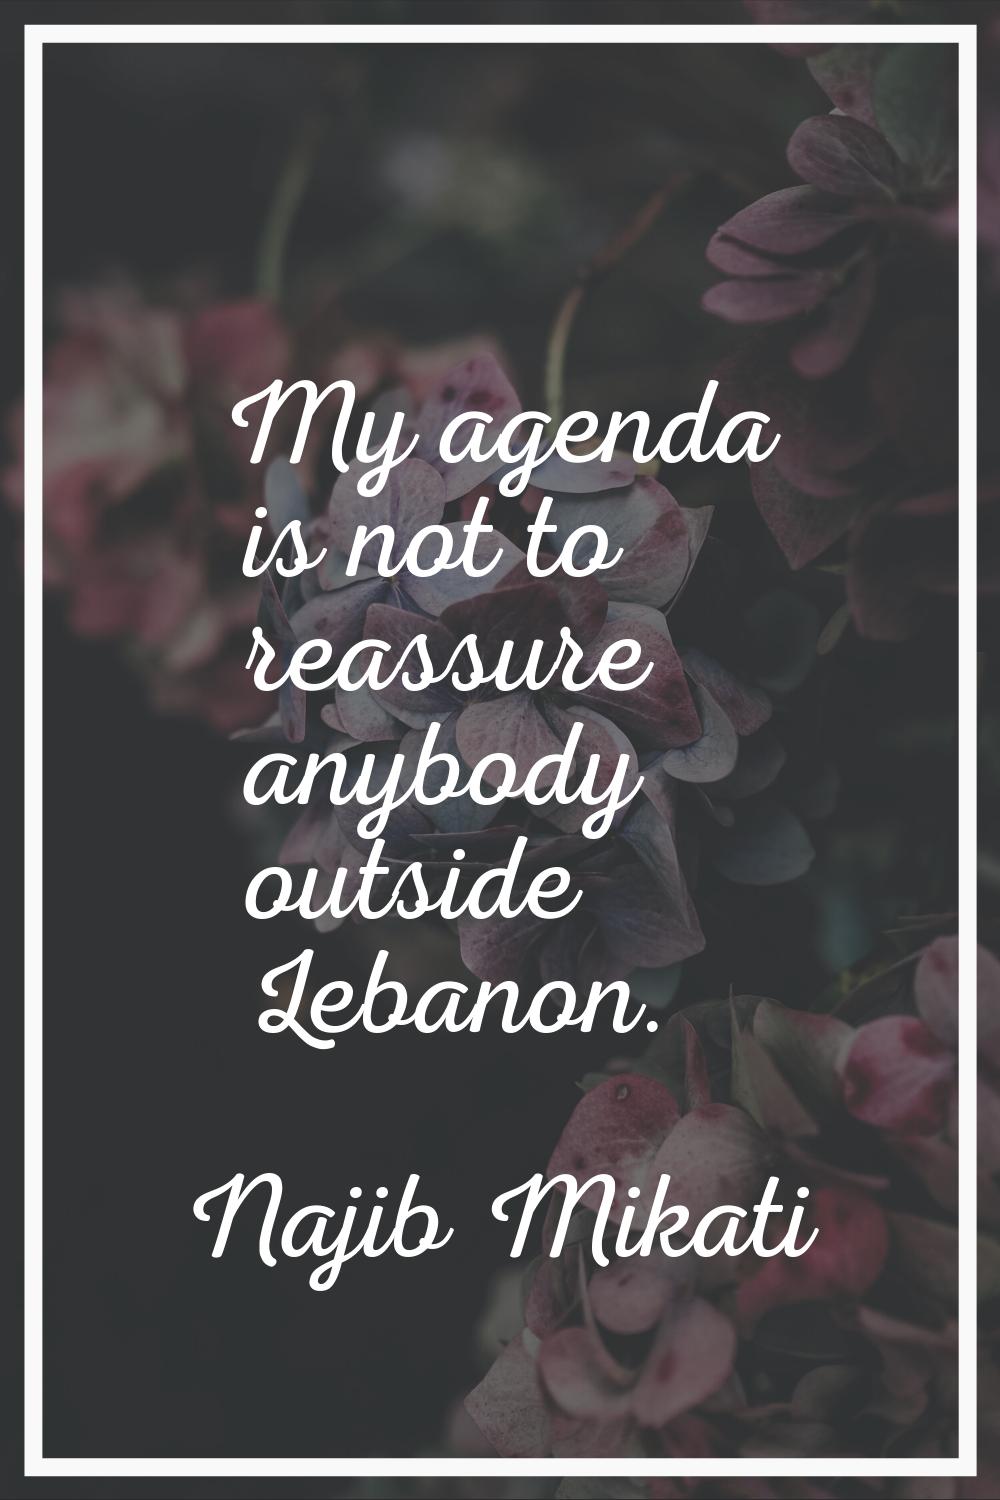 My agenda is not to reassure anybody outside Lebanon.